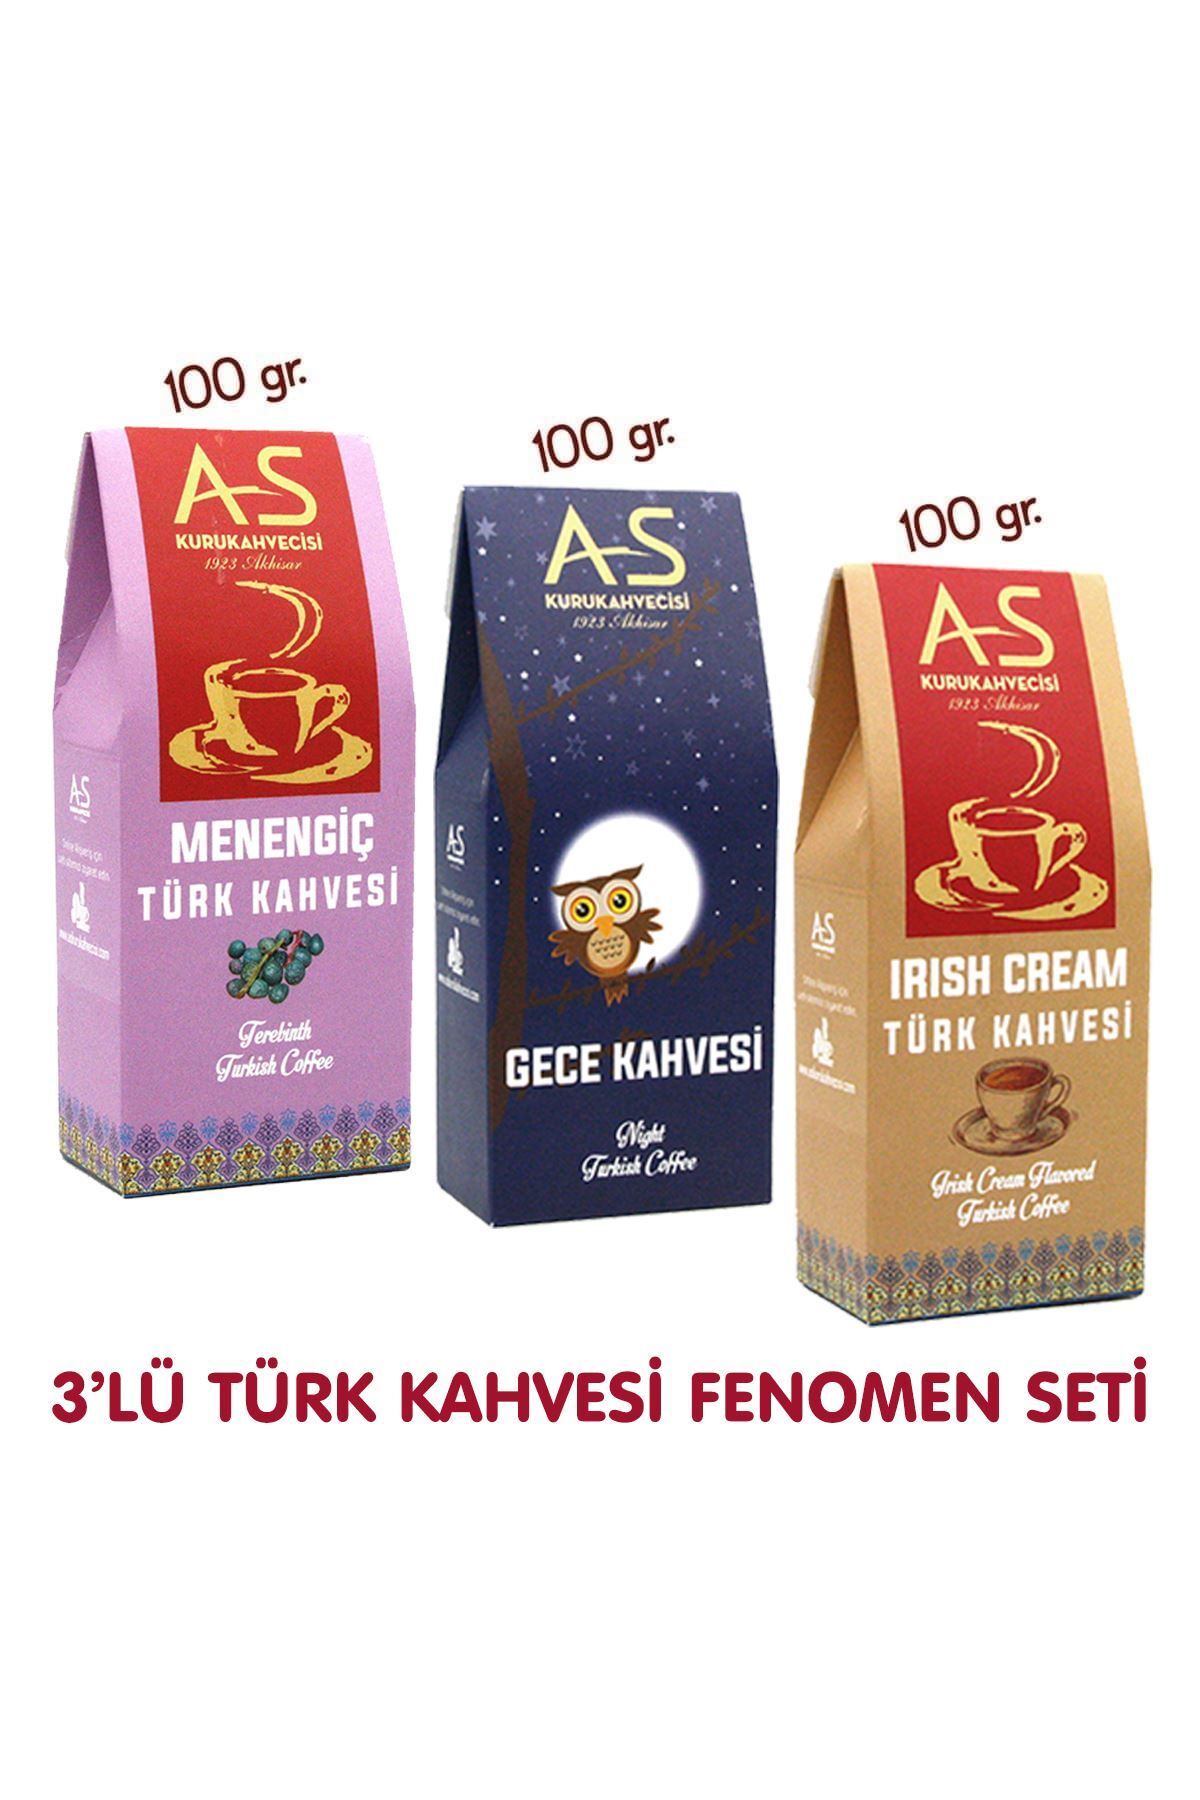 AS Kurukahvecisi 3'lü Türk Kahvesi Fenomen Seti (MENENGİÇ,GECE,İRİSH)